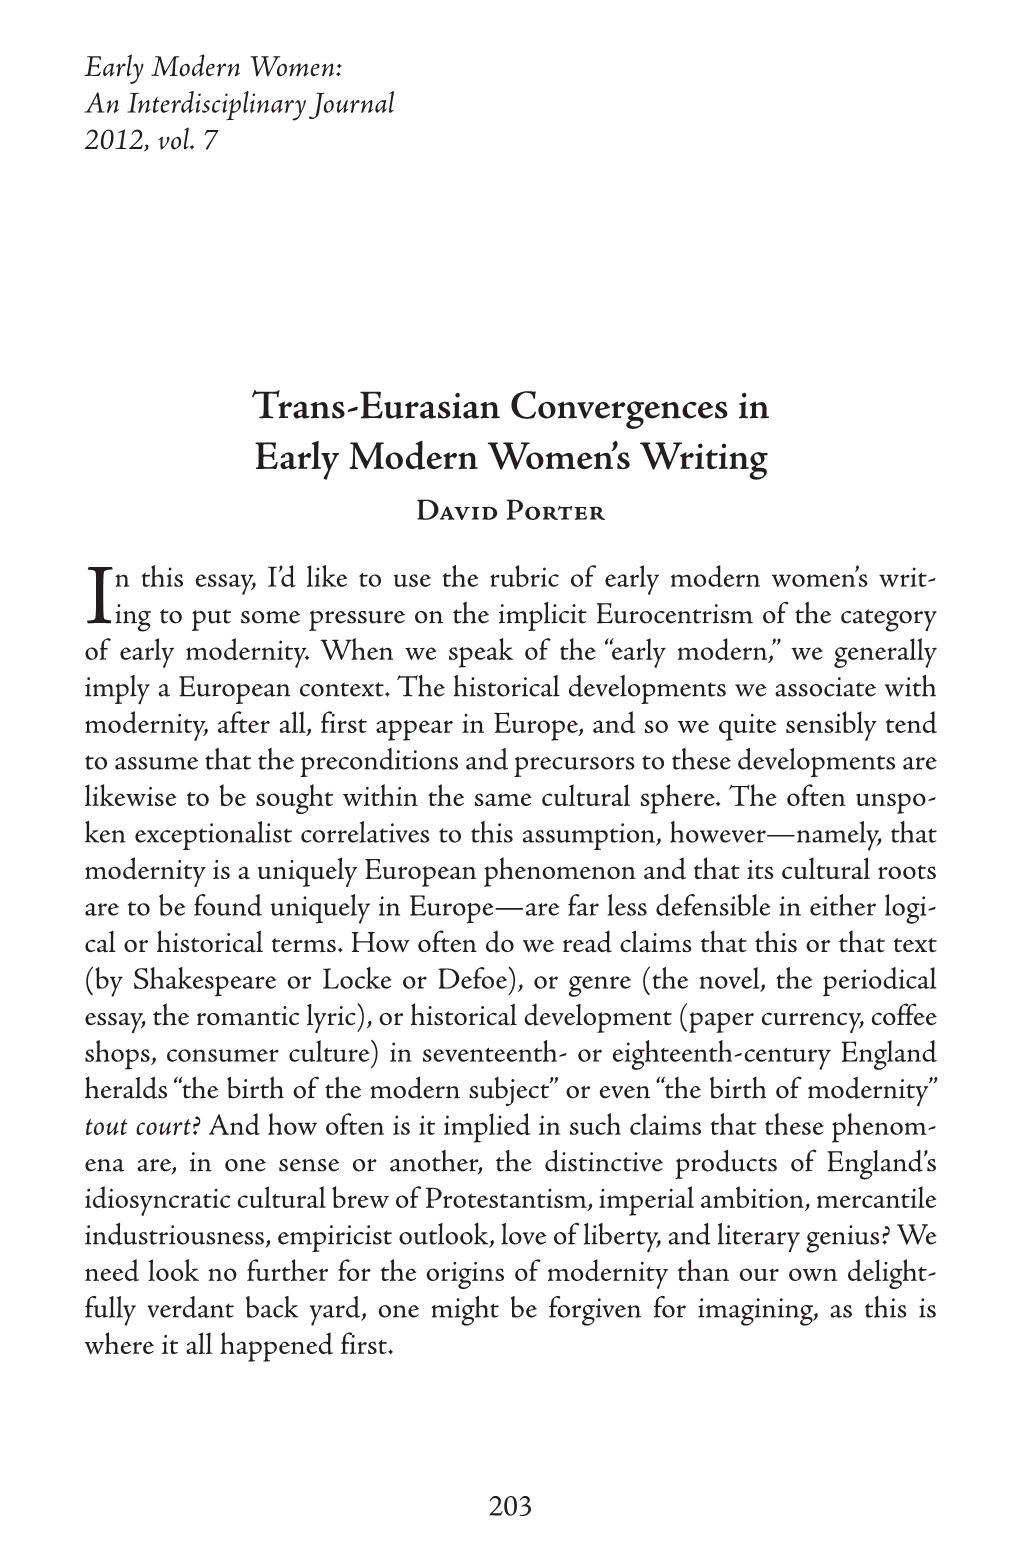 Trans-Eurasian Convergences in Early Modern Women's Writing